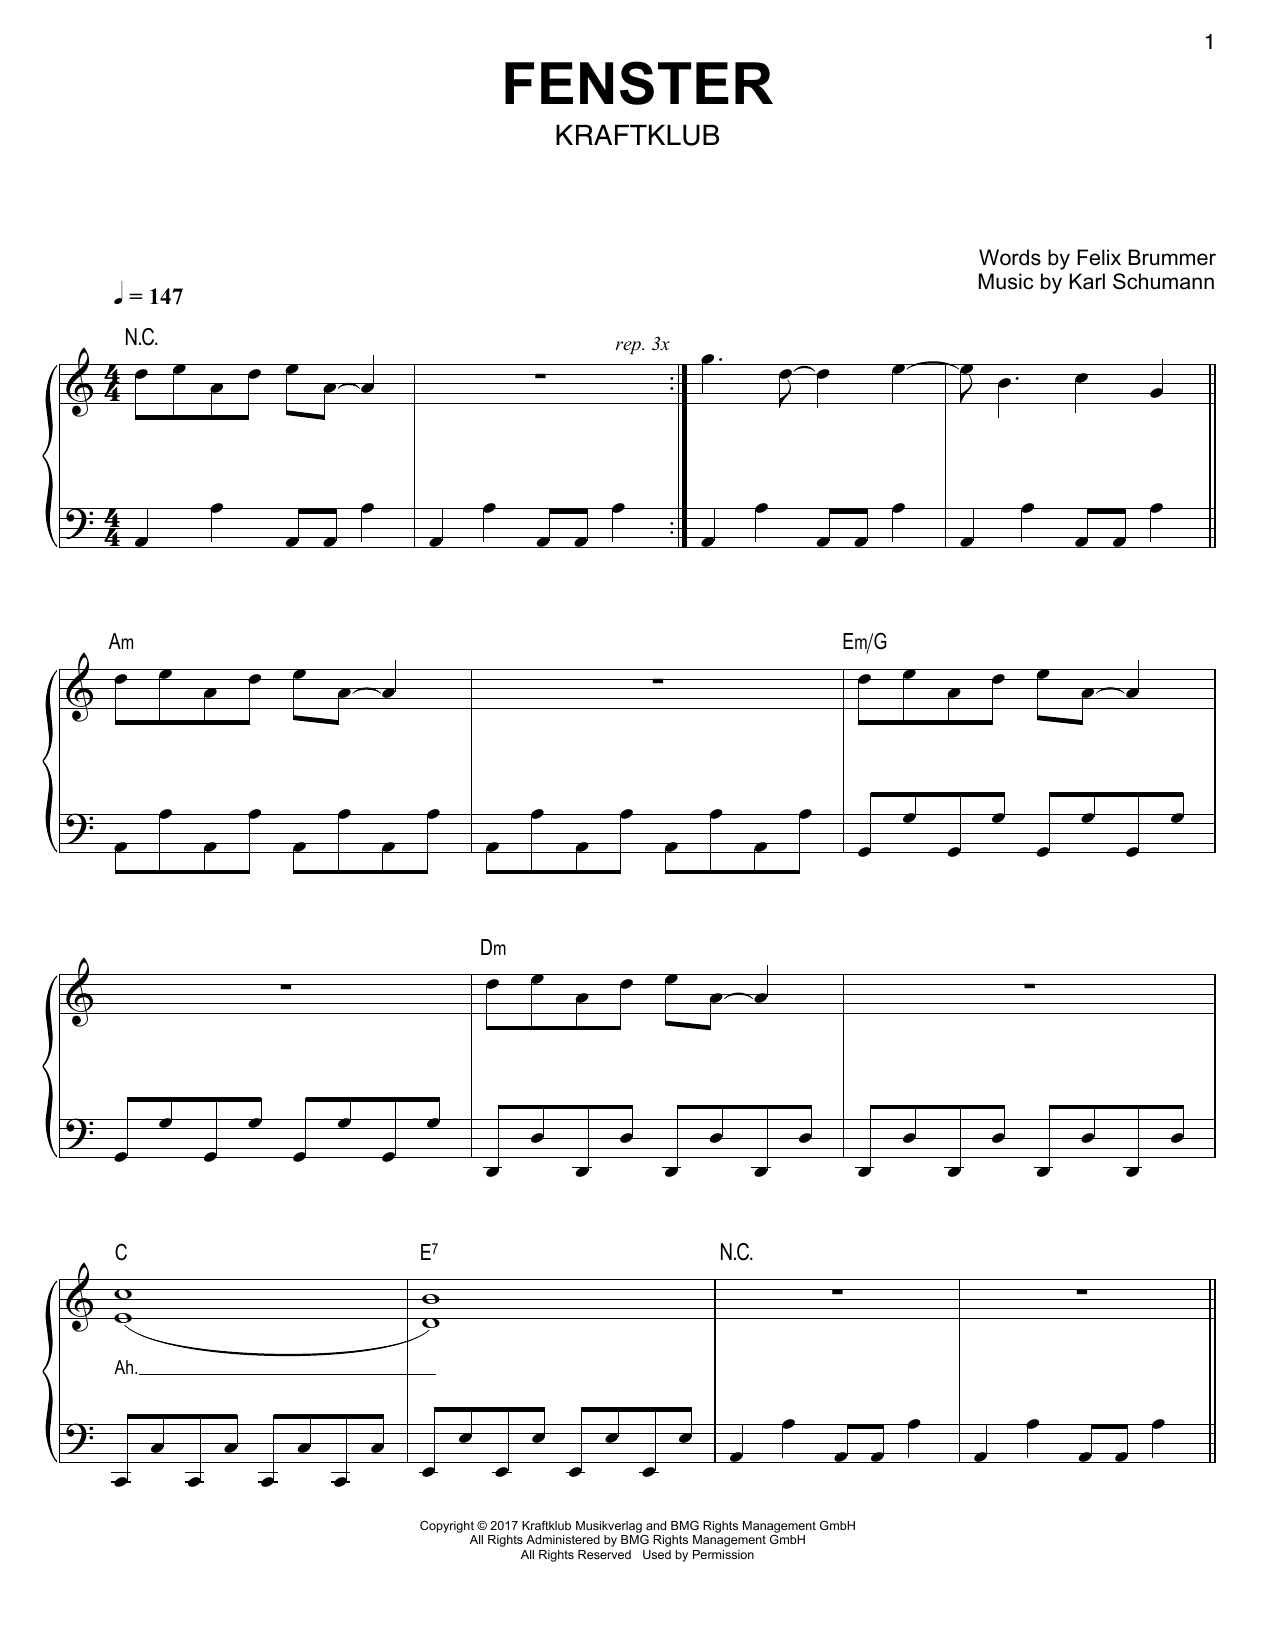 Kraftklub Fenster Sheet Music Notes & Chords for Easy Piano - Download or Print PDF